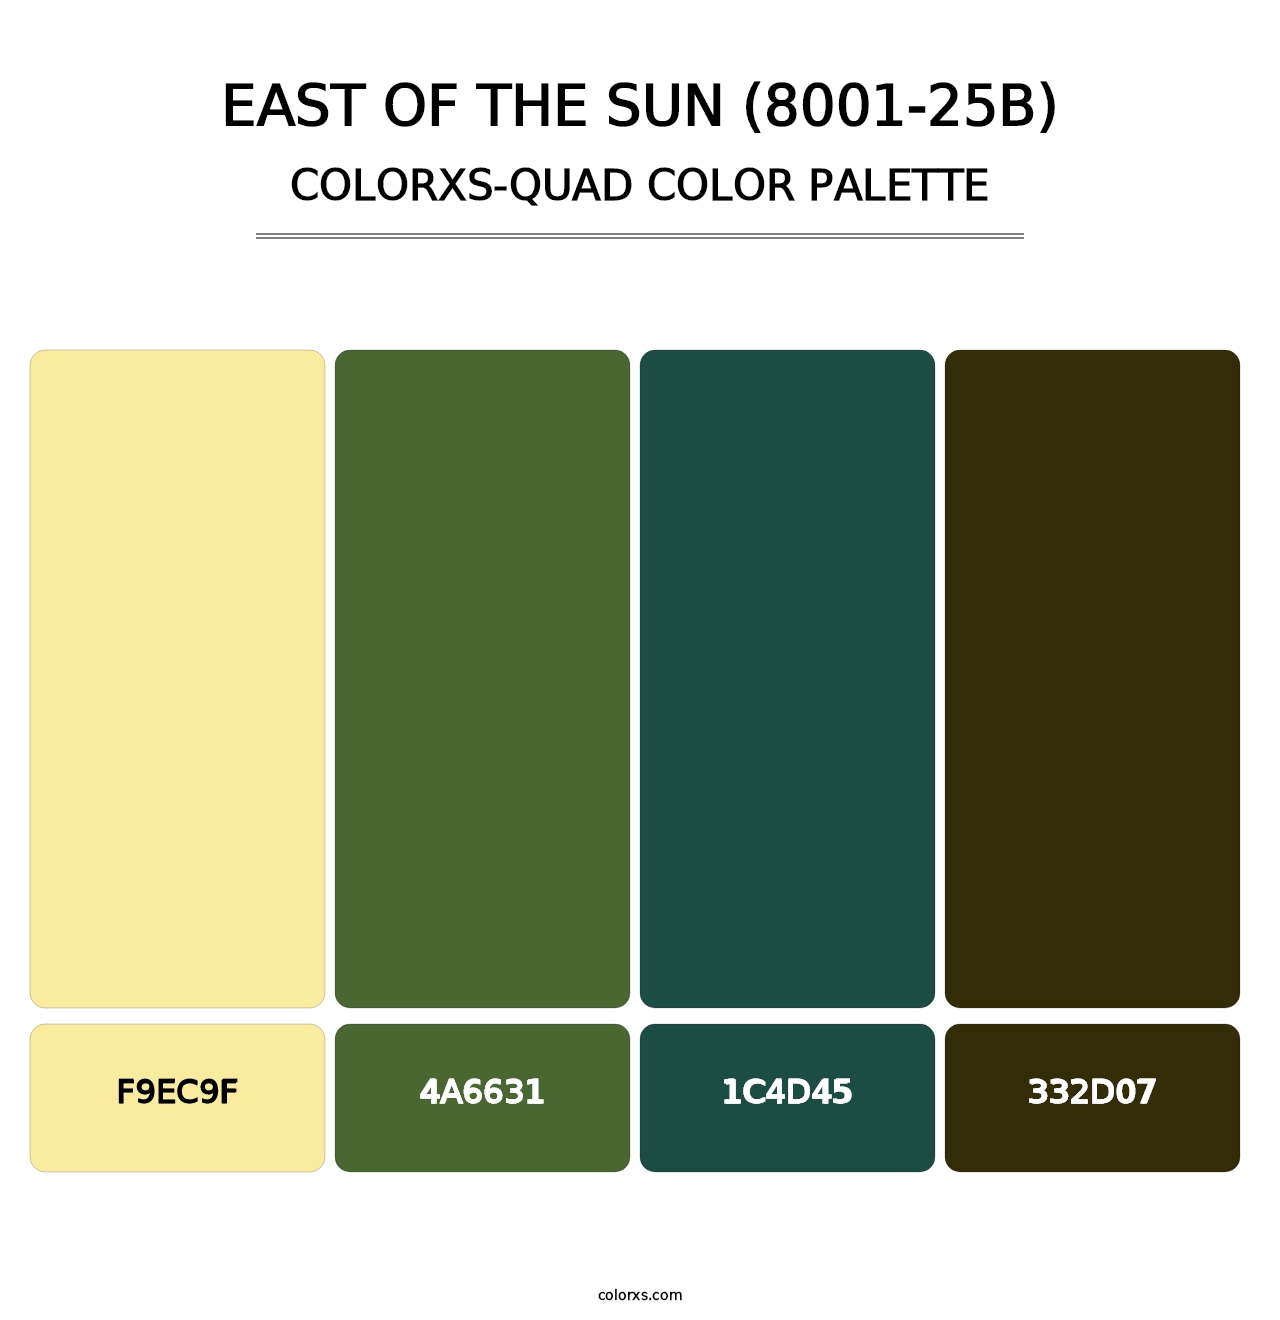 East of the Sun (8001-25B) - Colorxs Quad Palette